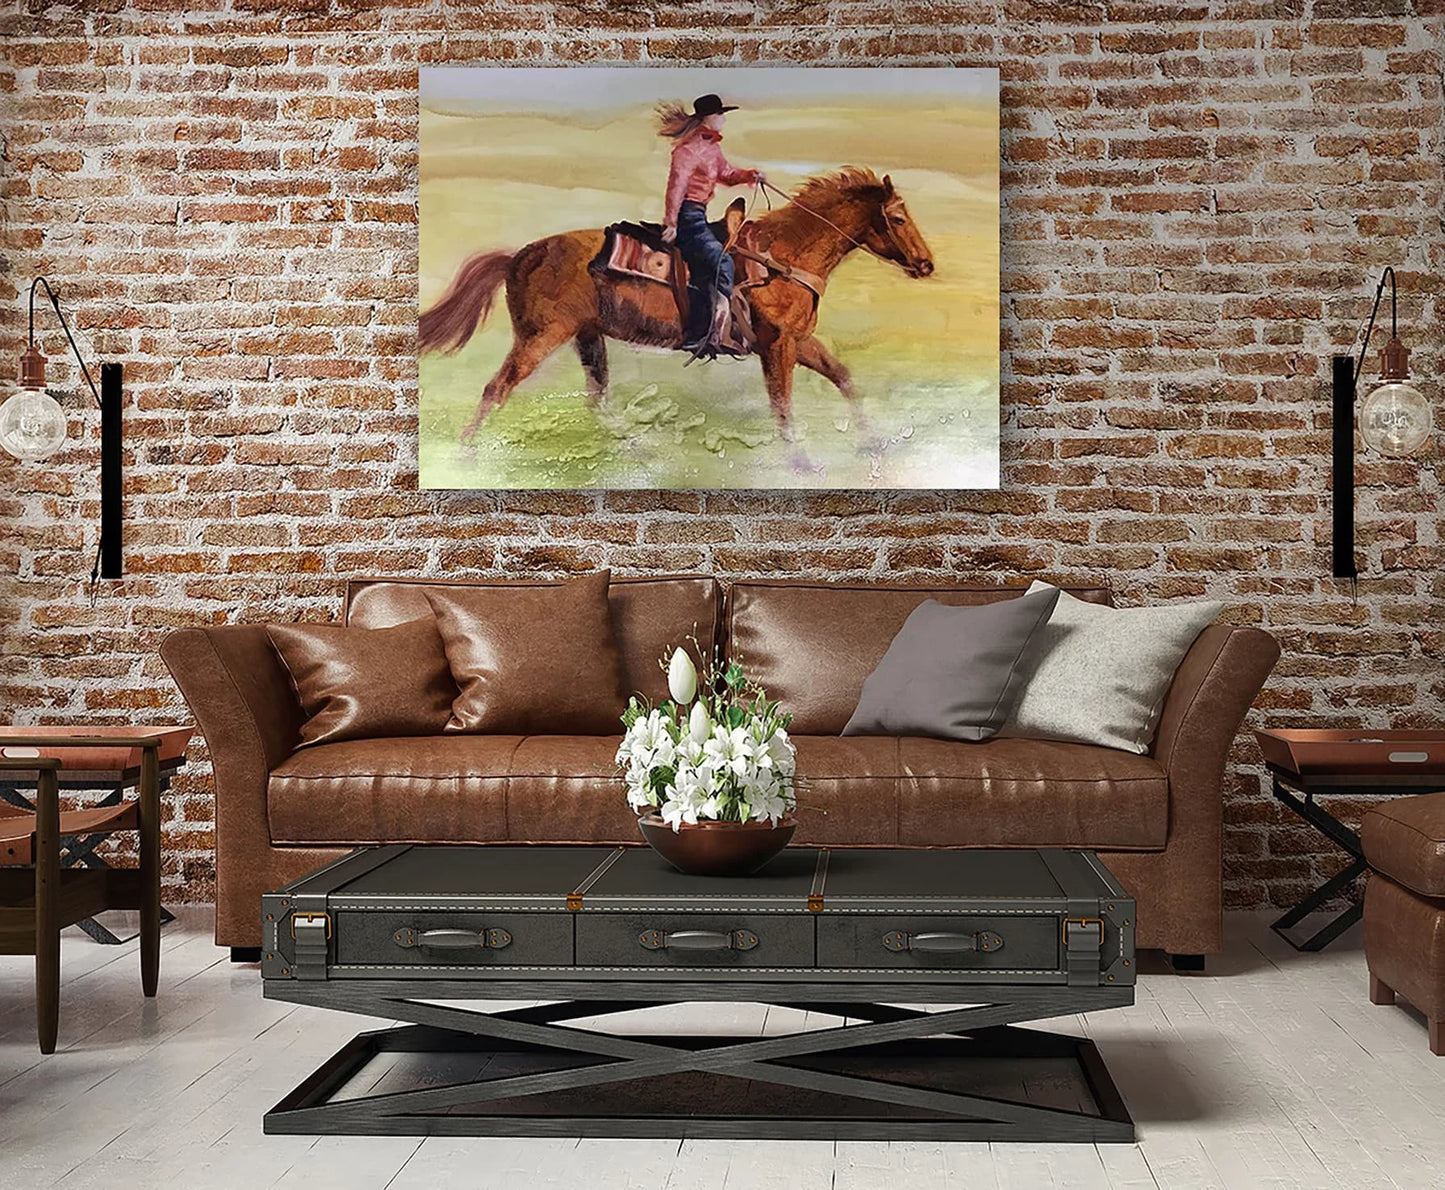 Original "River Ride: Girl Cowboy on a Running Horse" Hand Painted Artwork for Living Room, Bedroom, Foyer, Bar or Office - Framed Canvas